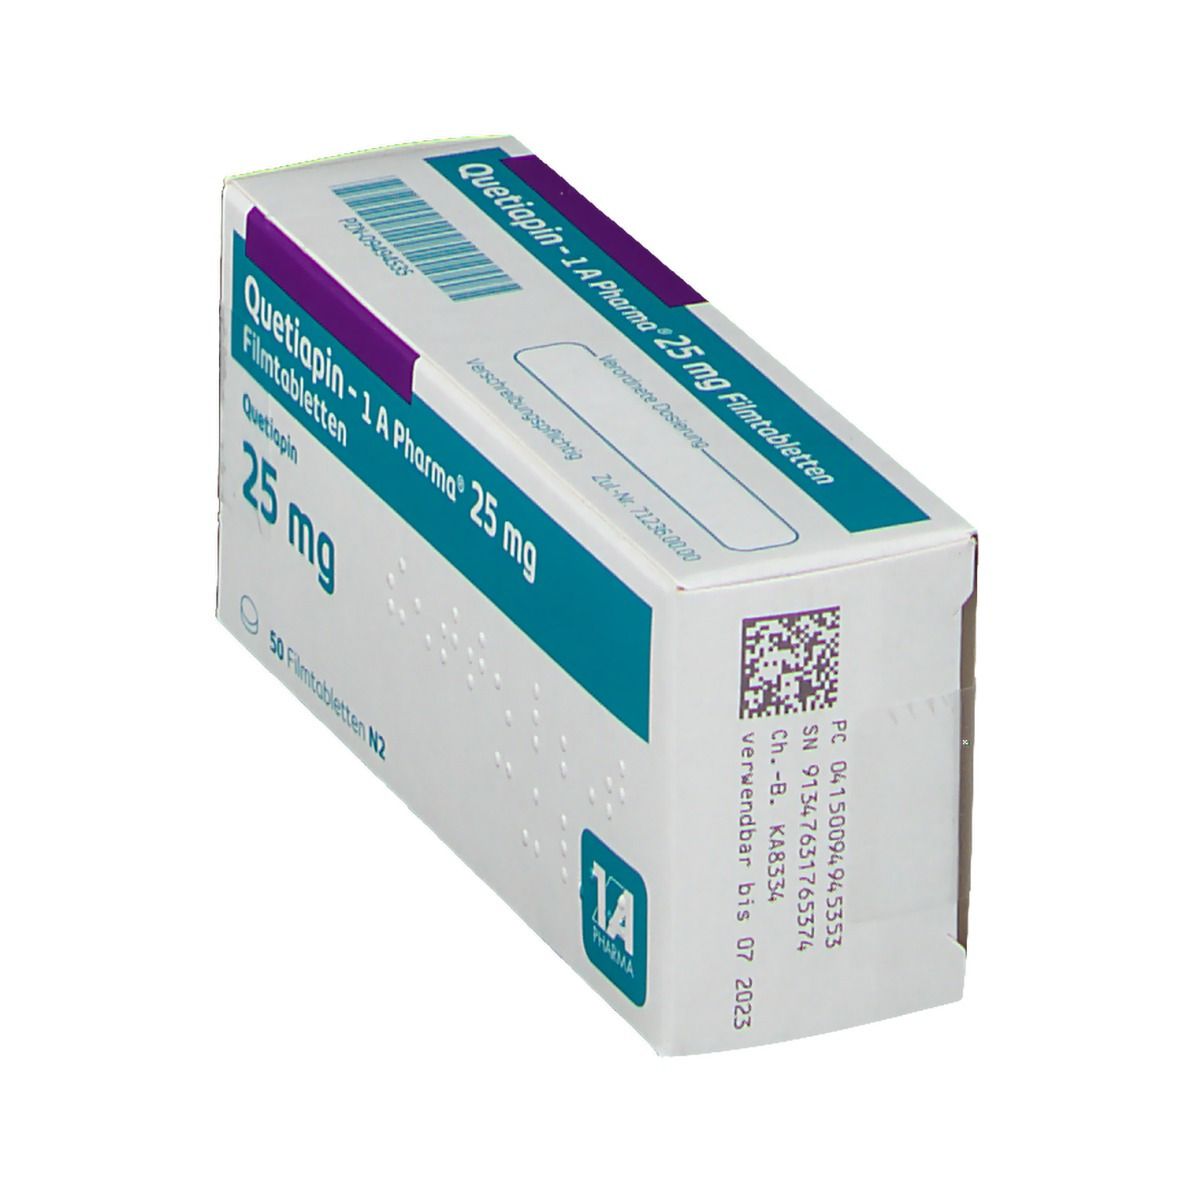 Quetiapin 1A Pharma® 25Mg